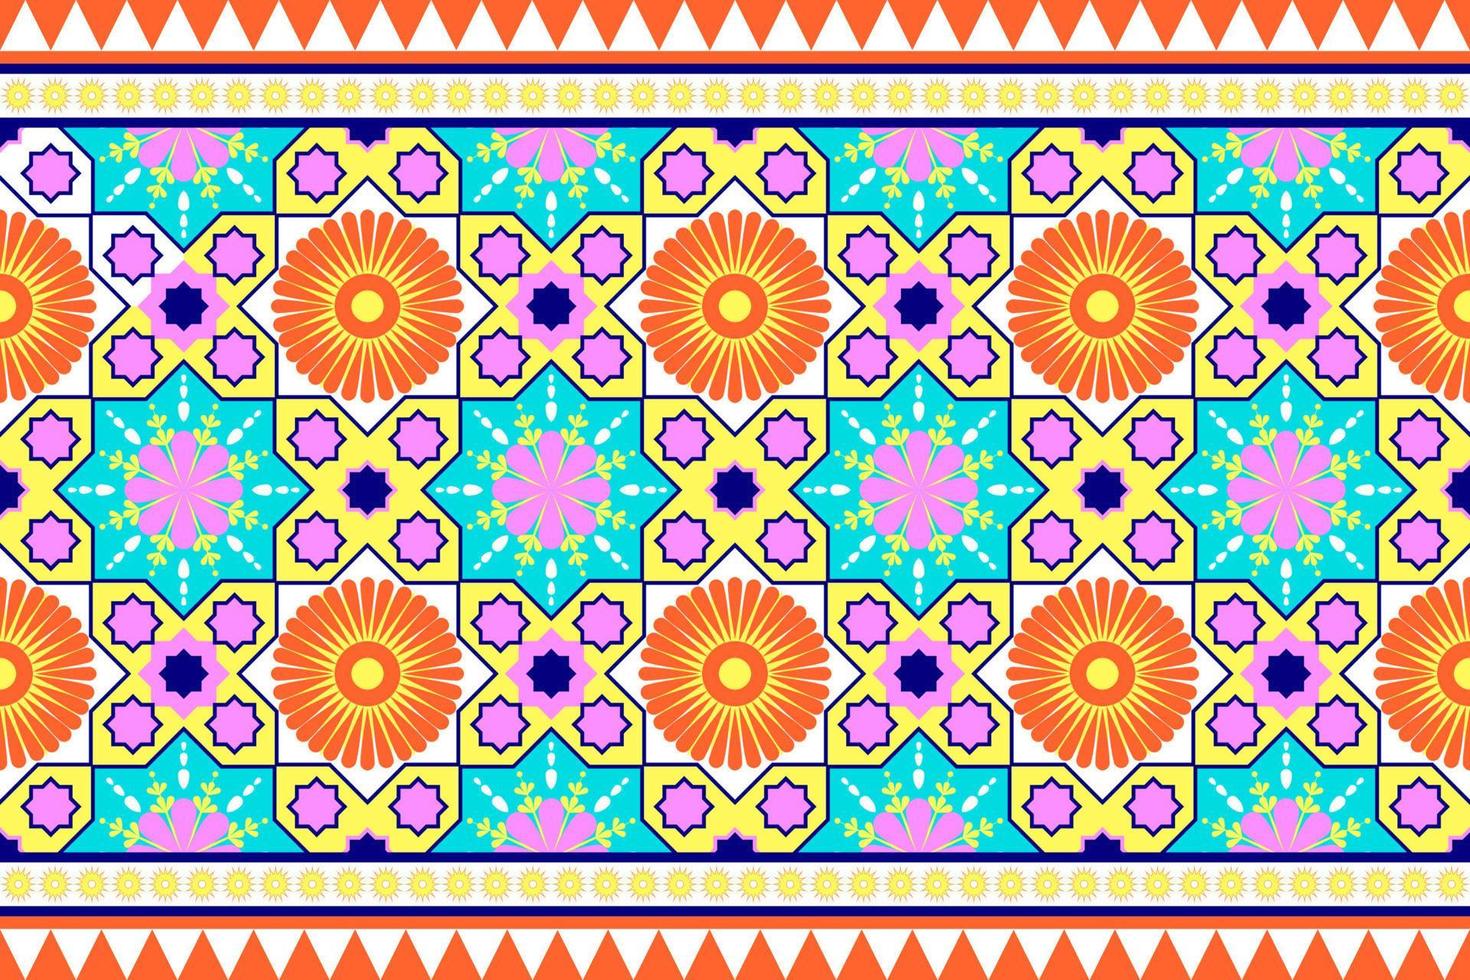 colorido diseño étnico geométrico sin costuras para papel tapiz, fondo, tela, cortina, alfombra, ropa e ilustración vectorial de envoltura. vector